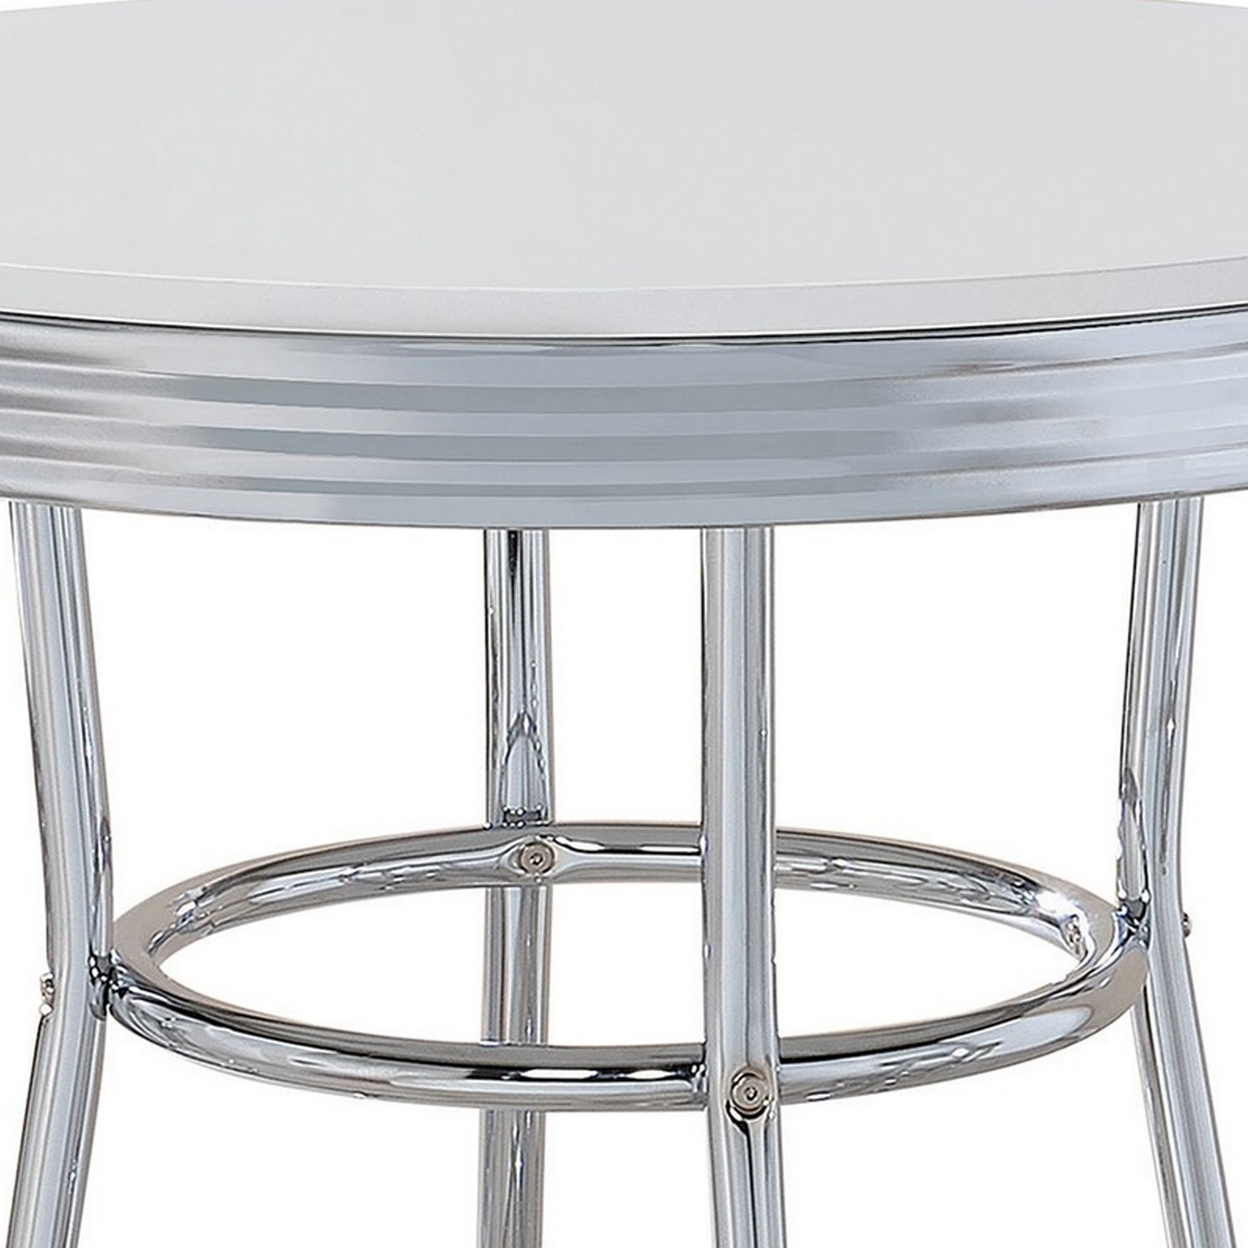 42 Inch Round Bar Table, Ribbed Apron, Glossy White Lacquer, Retro Style- Saltoro Sherpi